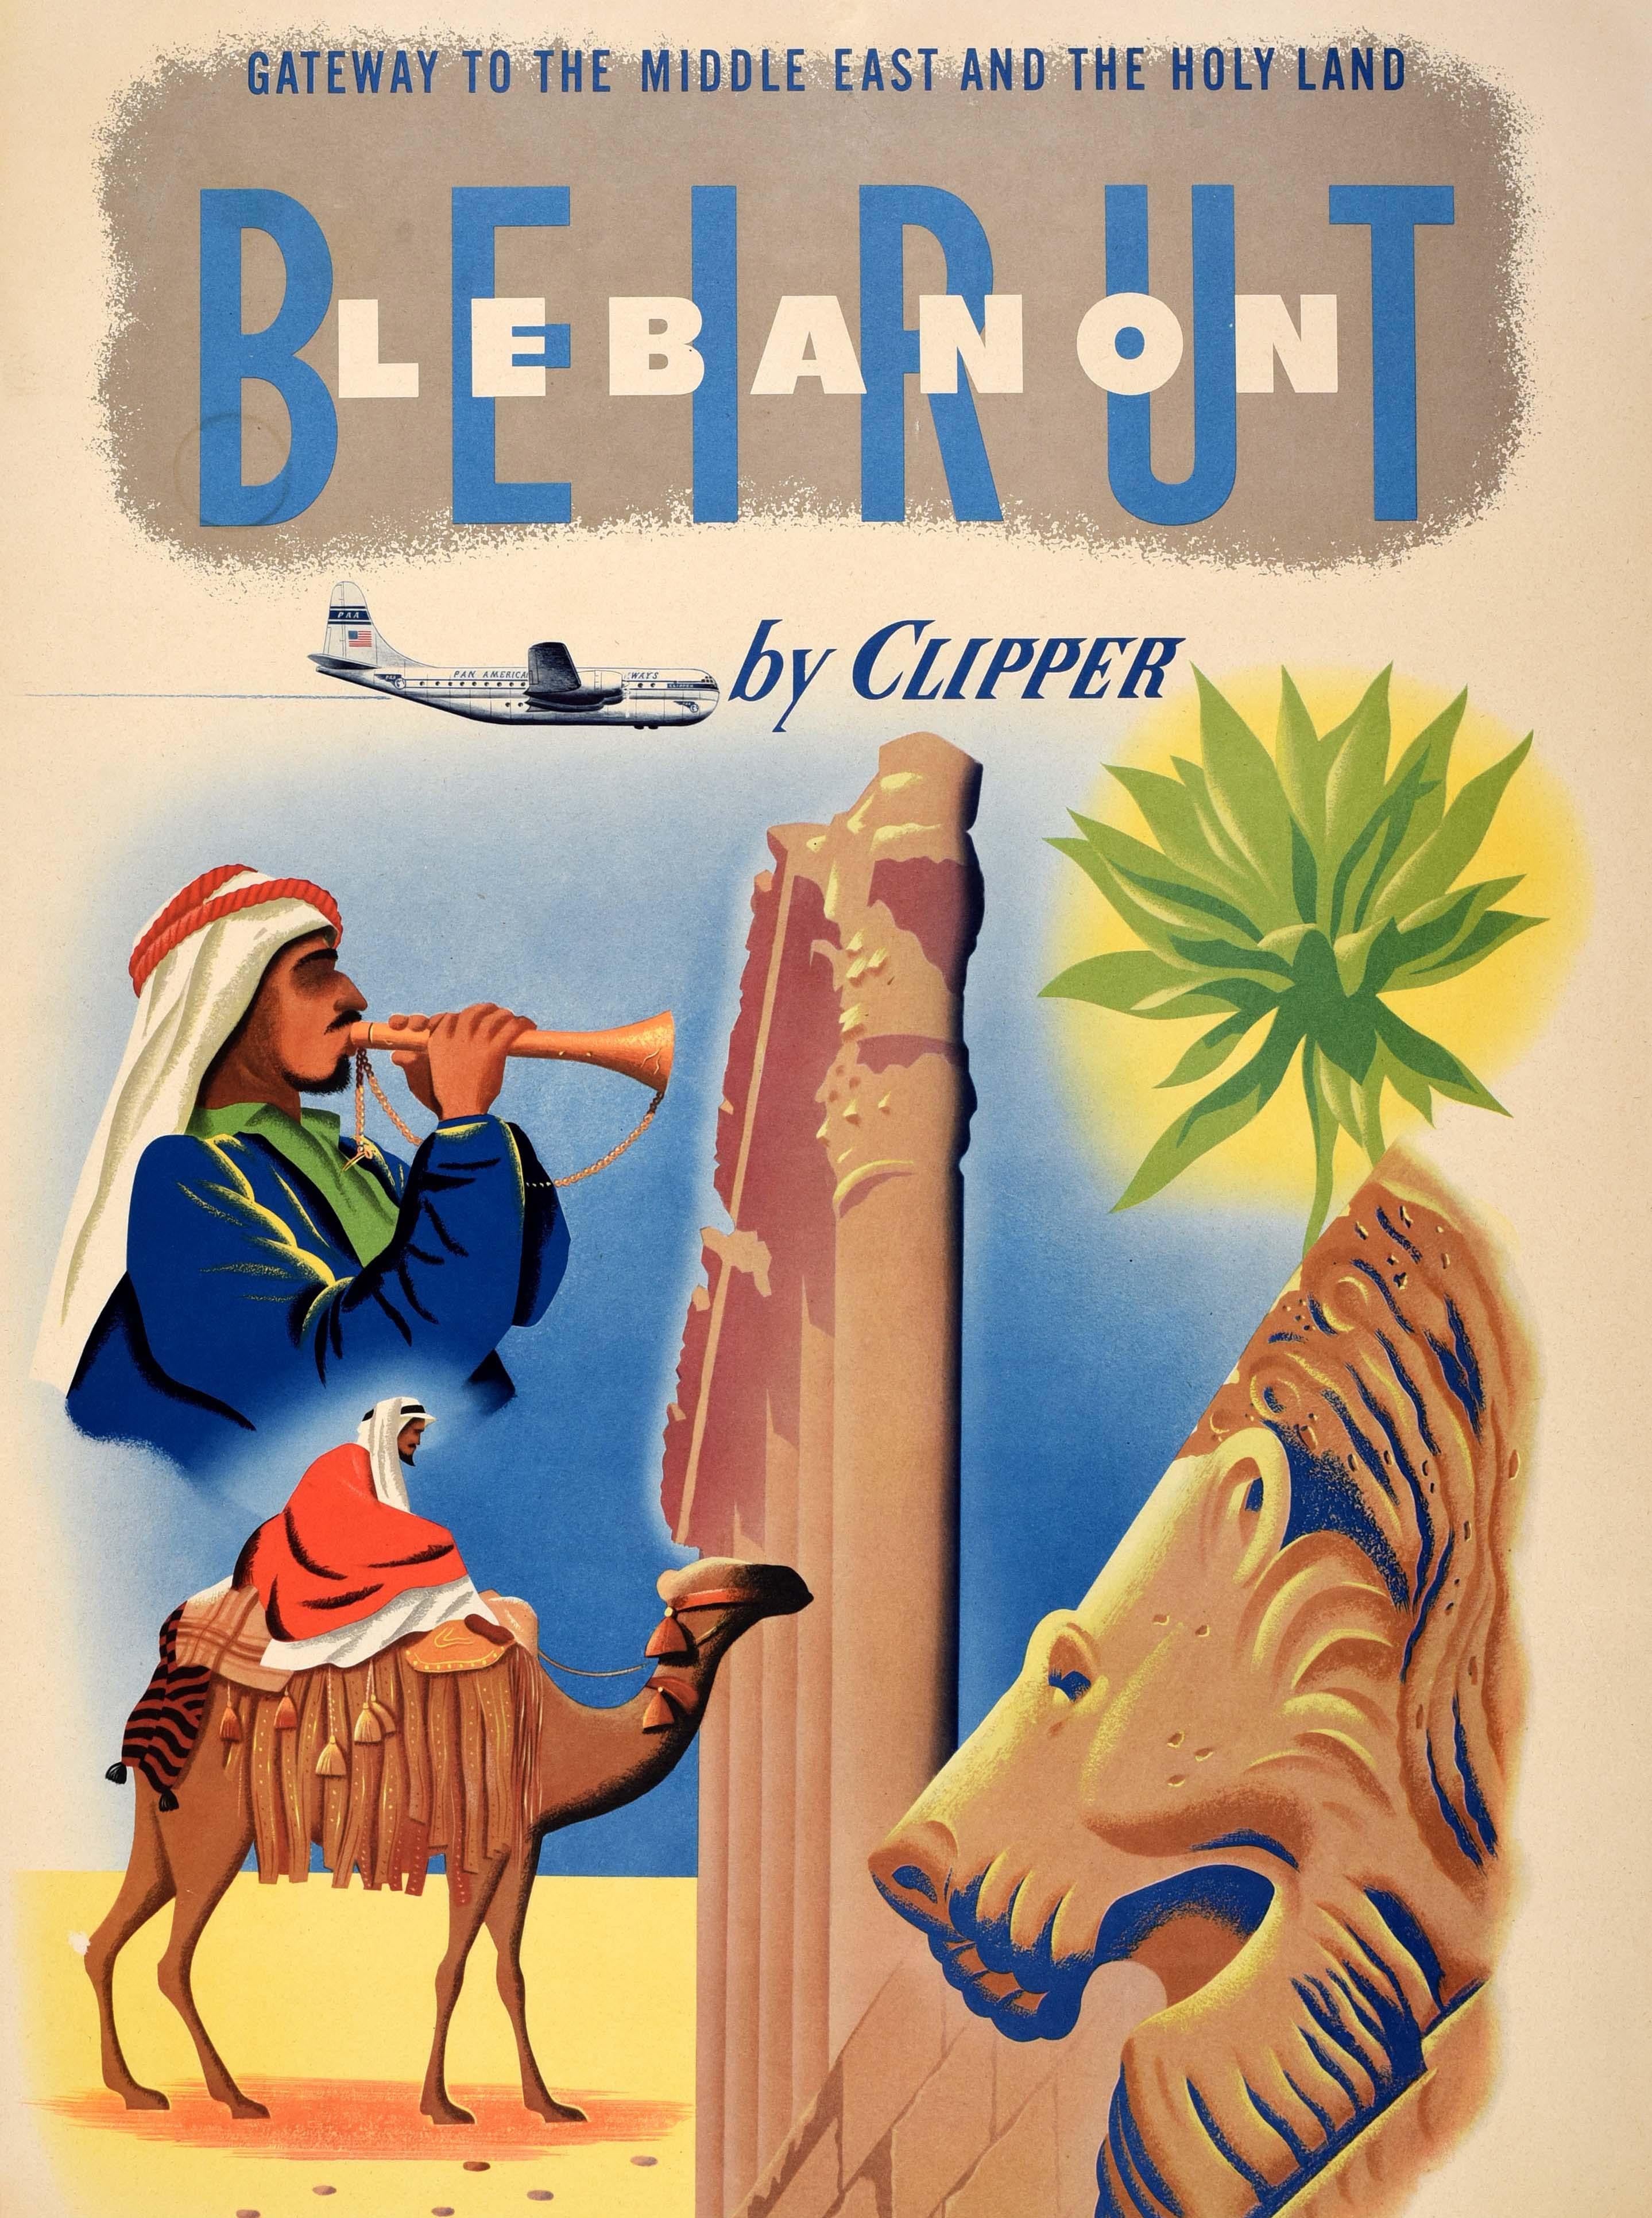 lebanon poster